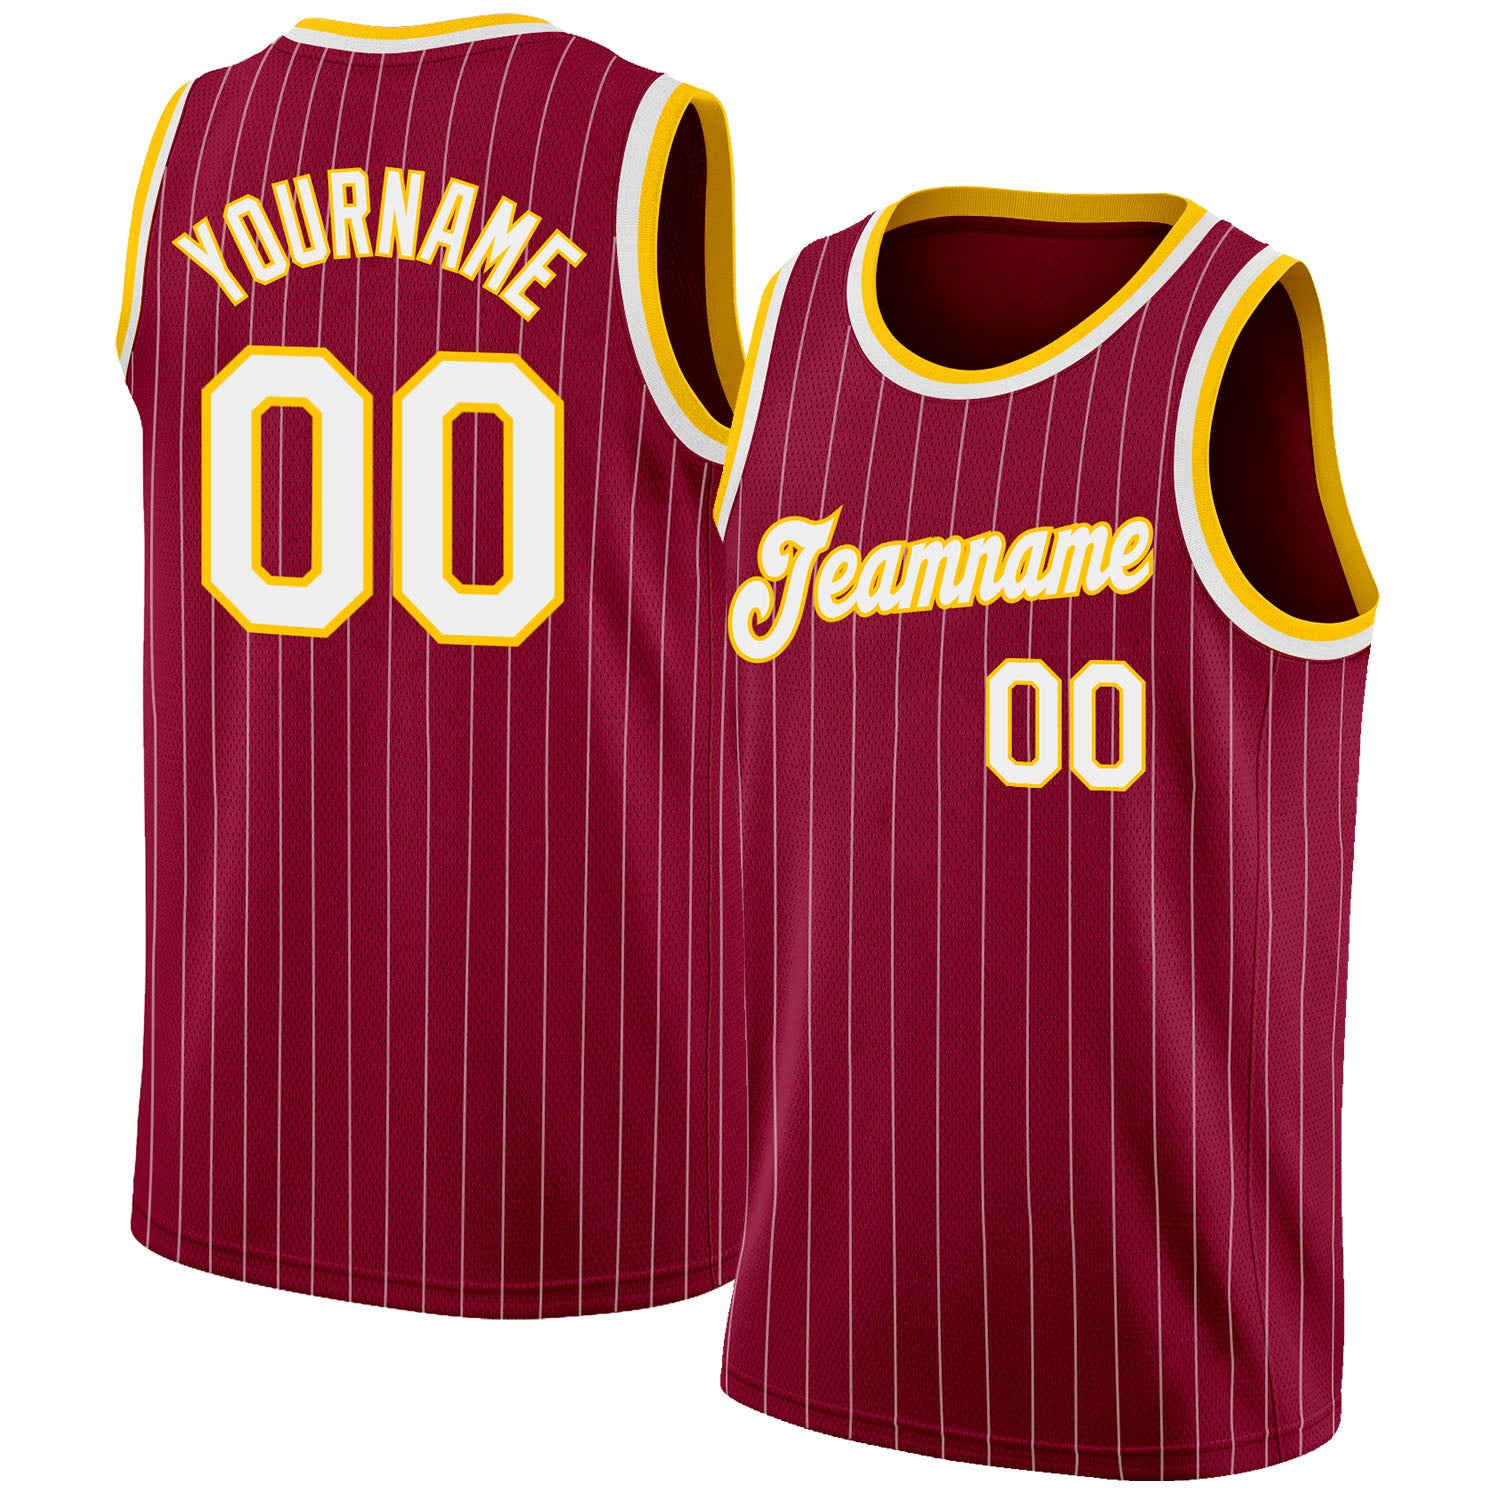 custom authentic basketball jerseys